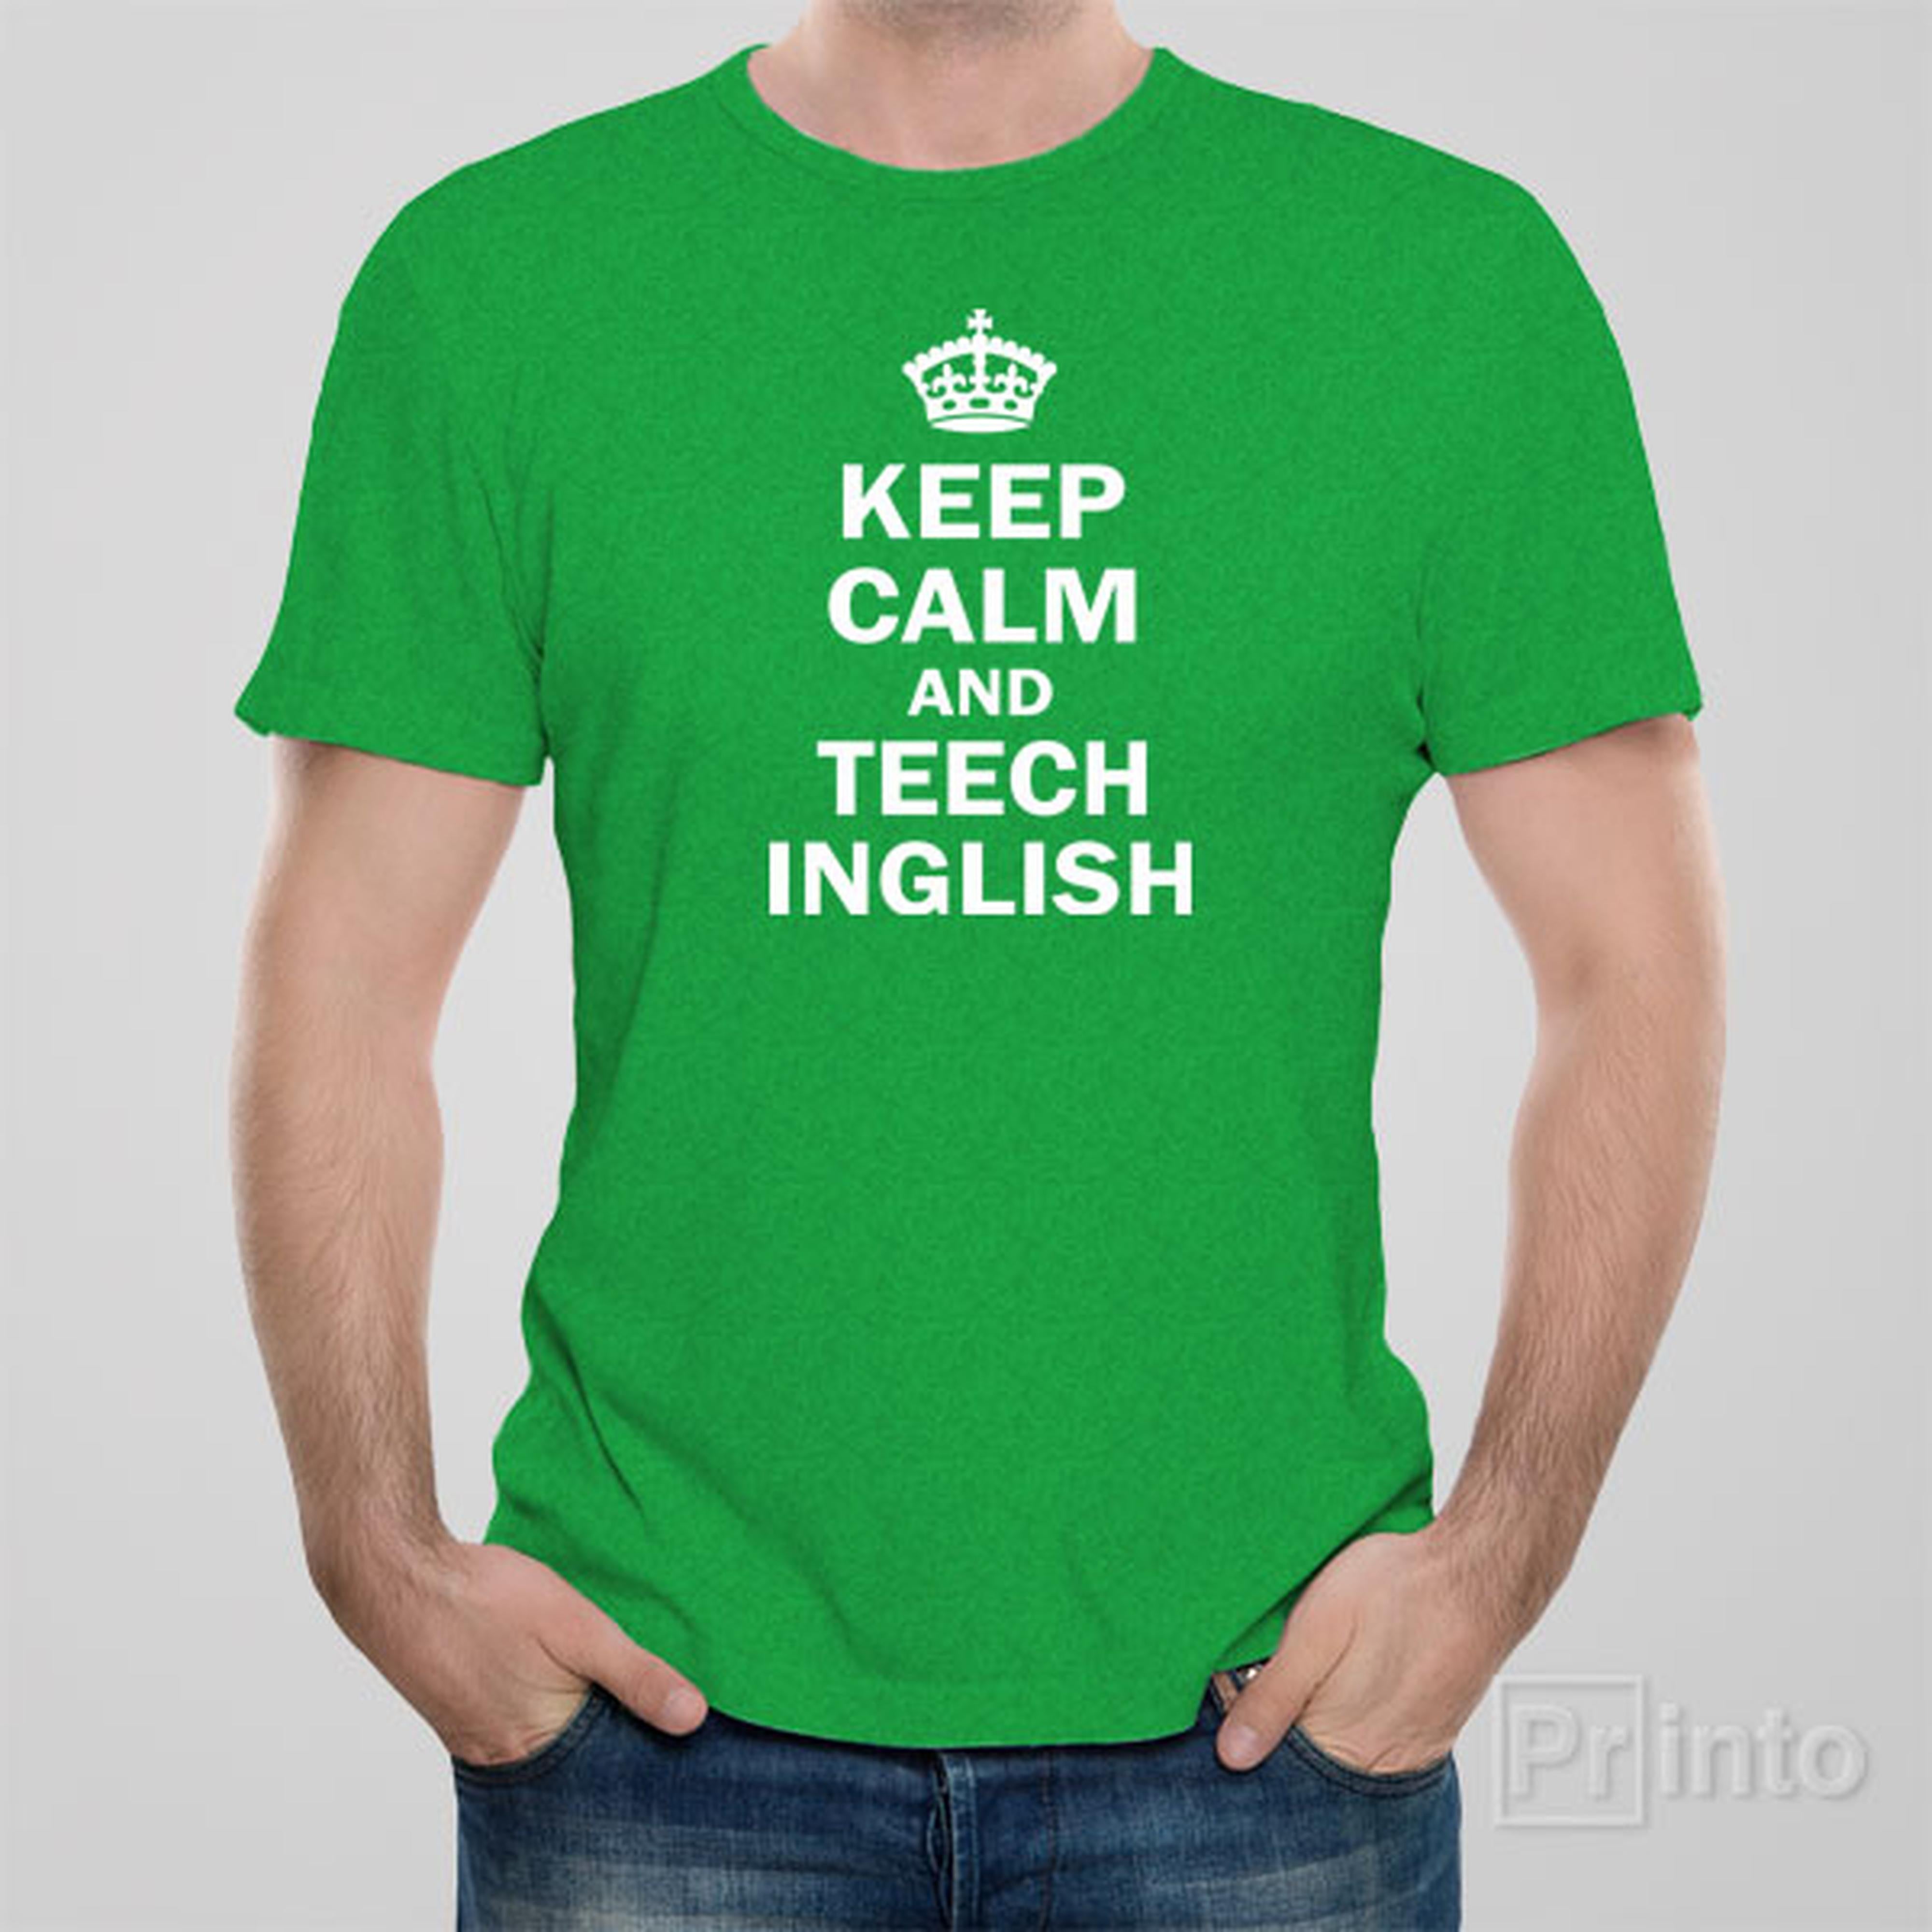 keep-calm-and-teech-inglish-t-shirt